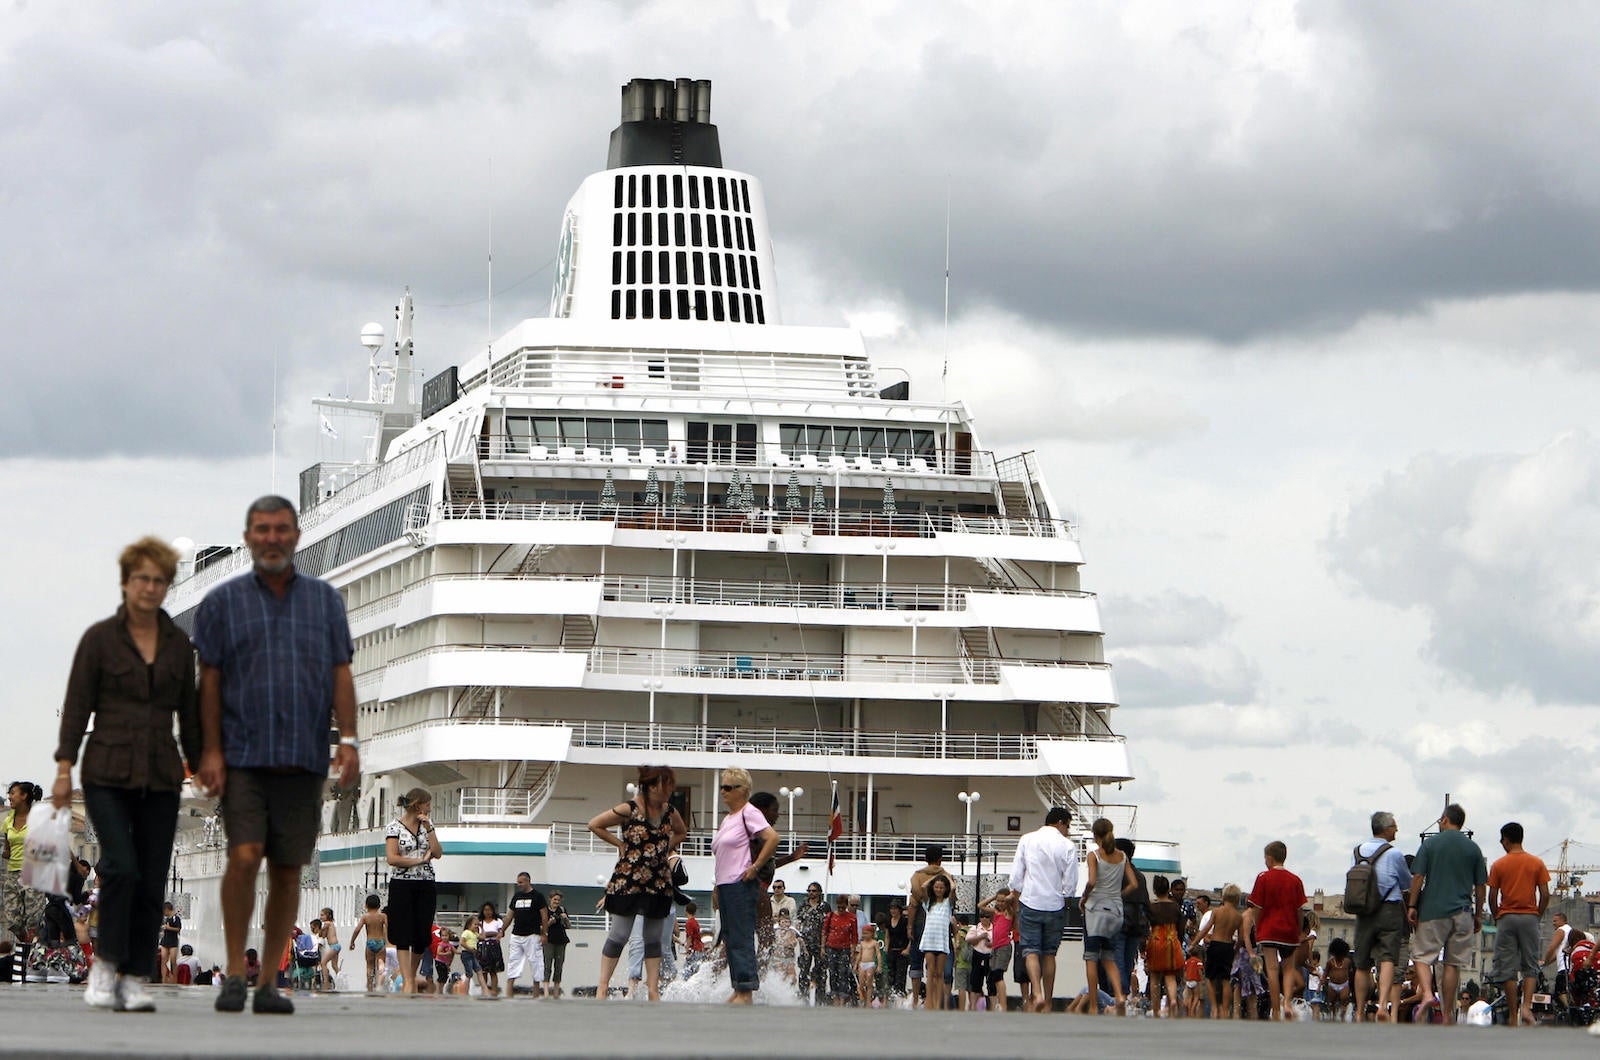 People walk past the tourist cruise ship